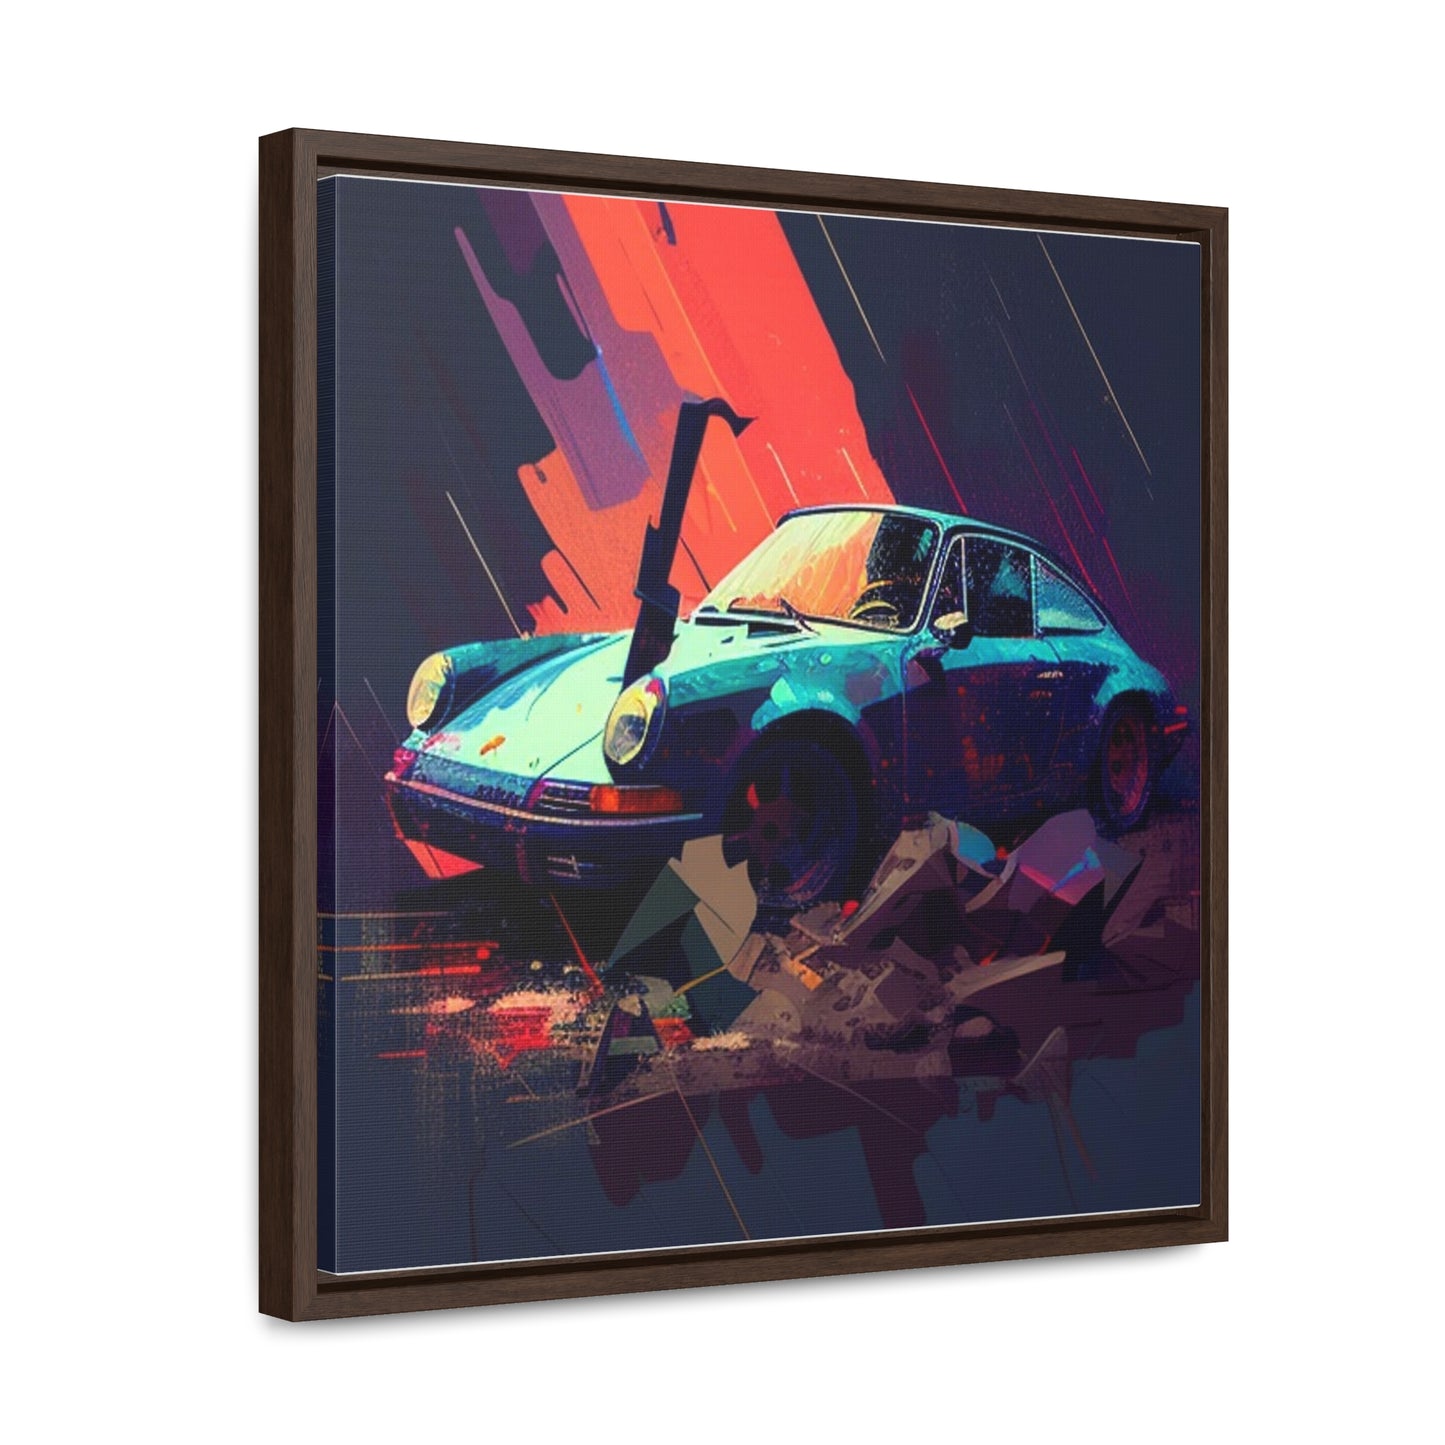 Gallery Canvas Wraps, Square Frame Porsche Abstract 2